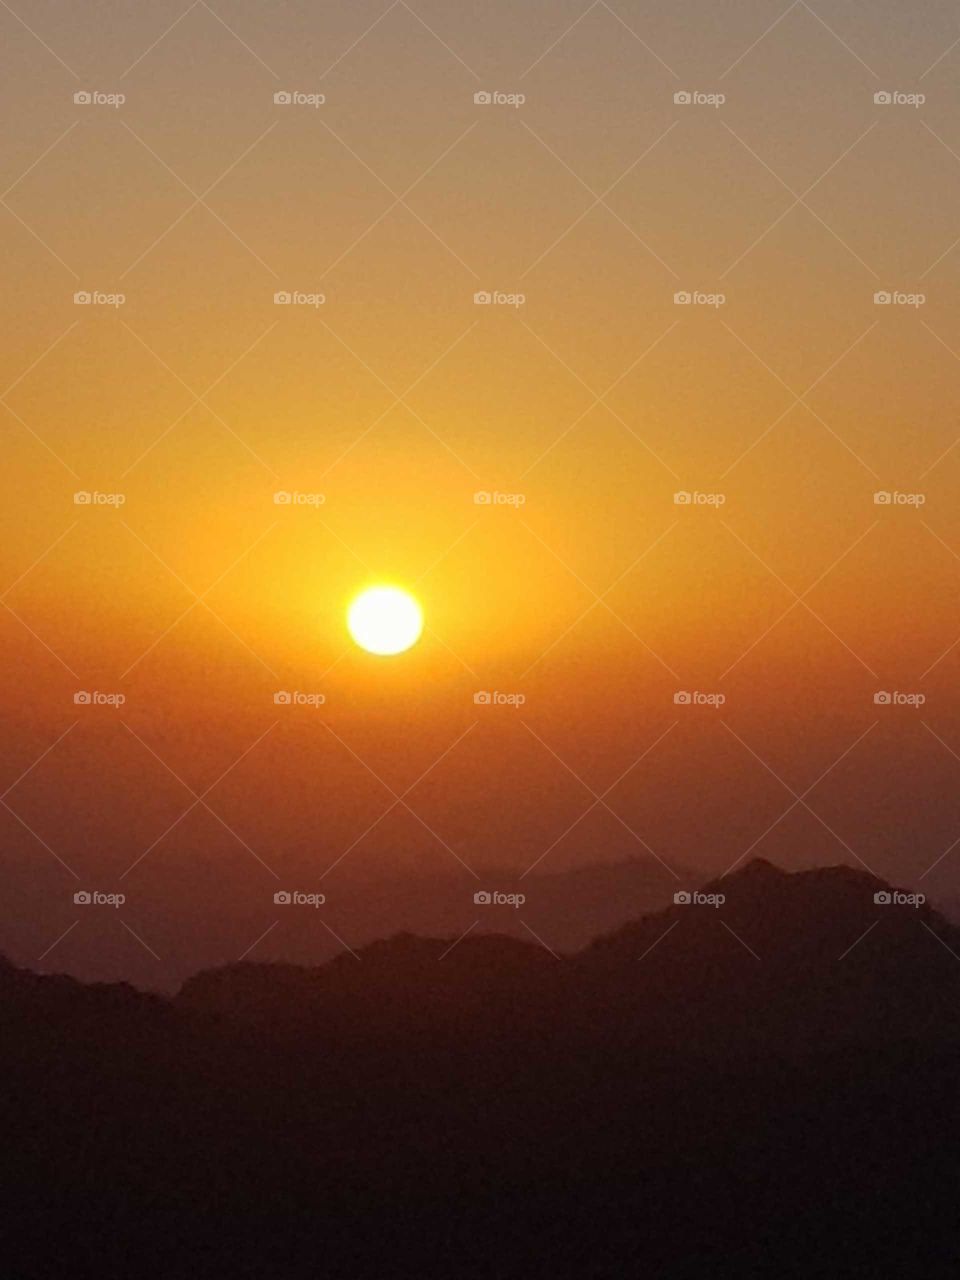 Mount Sinai Sunrise